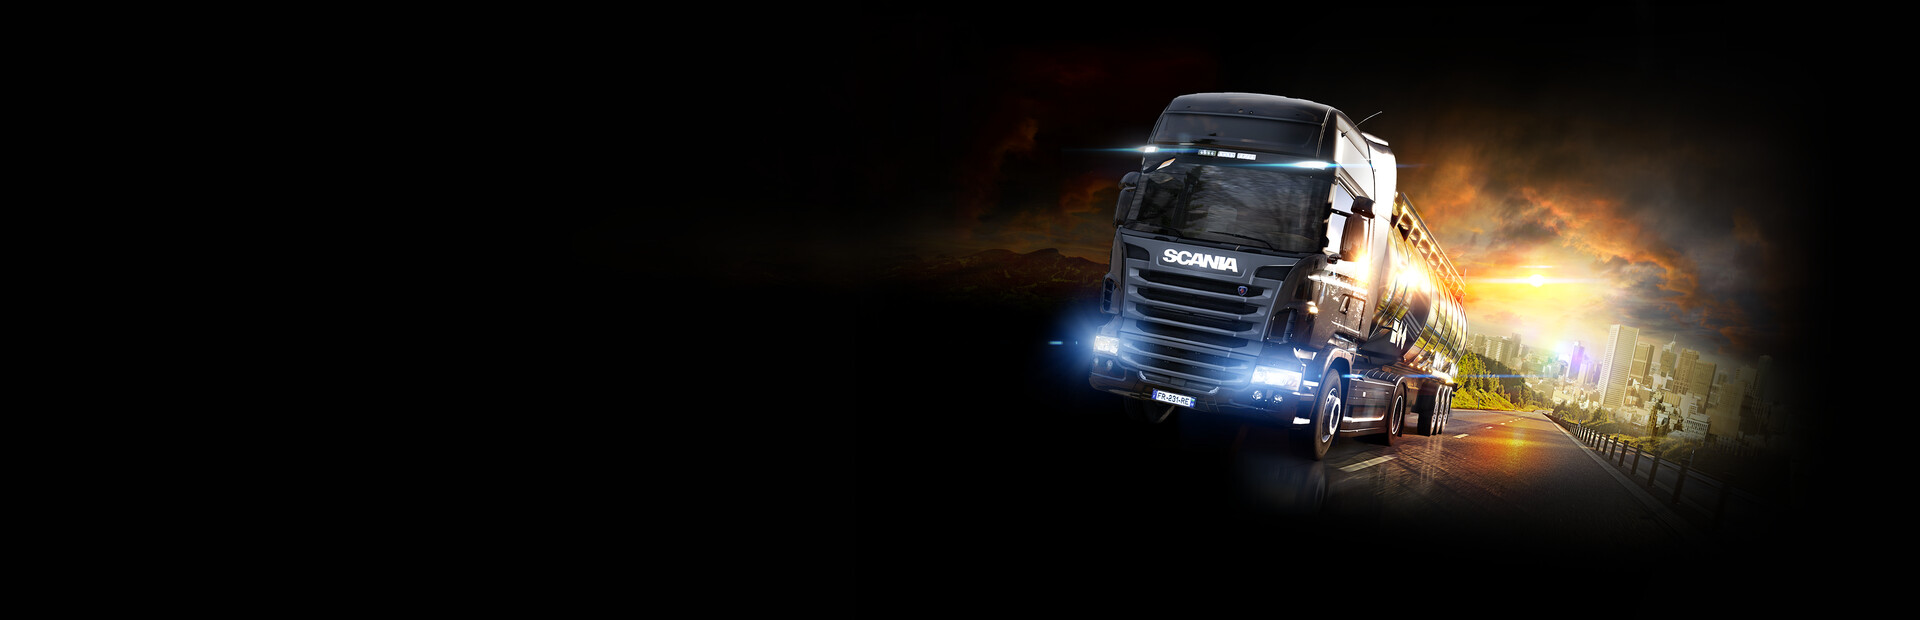 Euro Truck Simulator 2 cover image